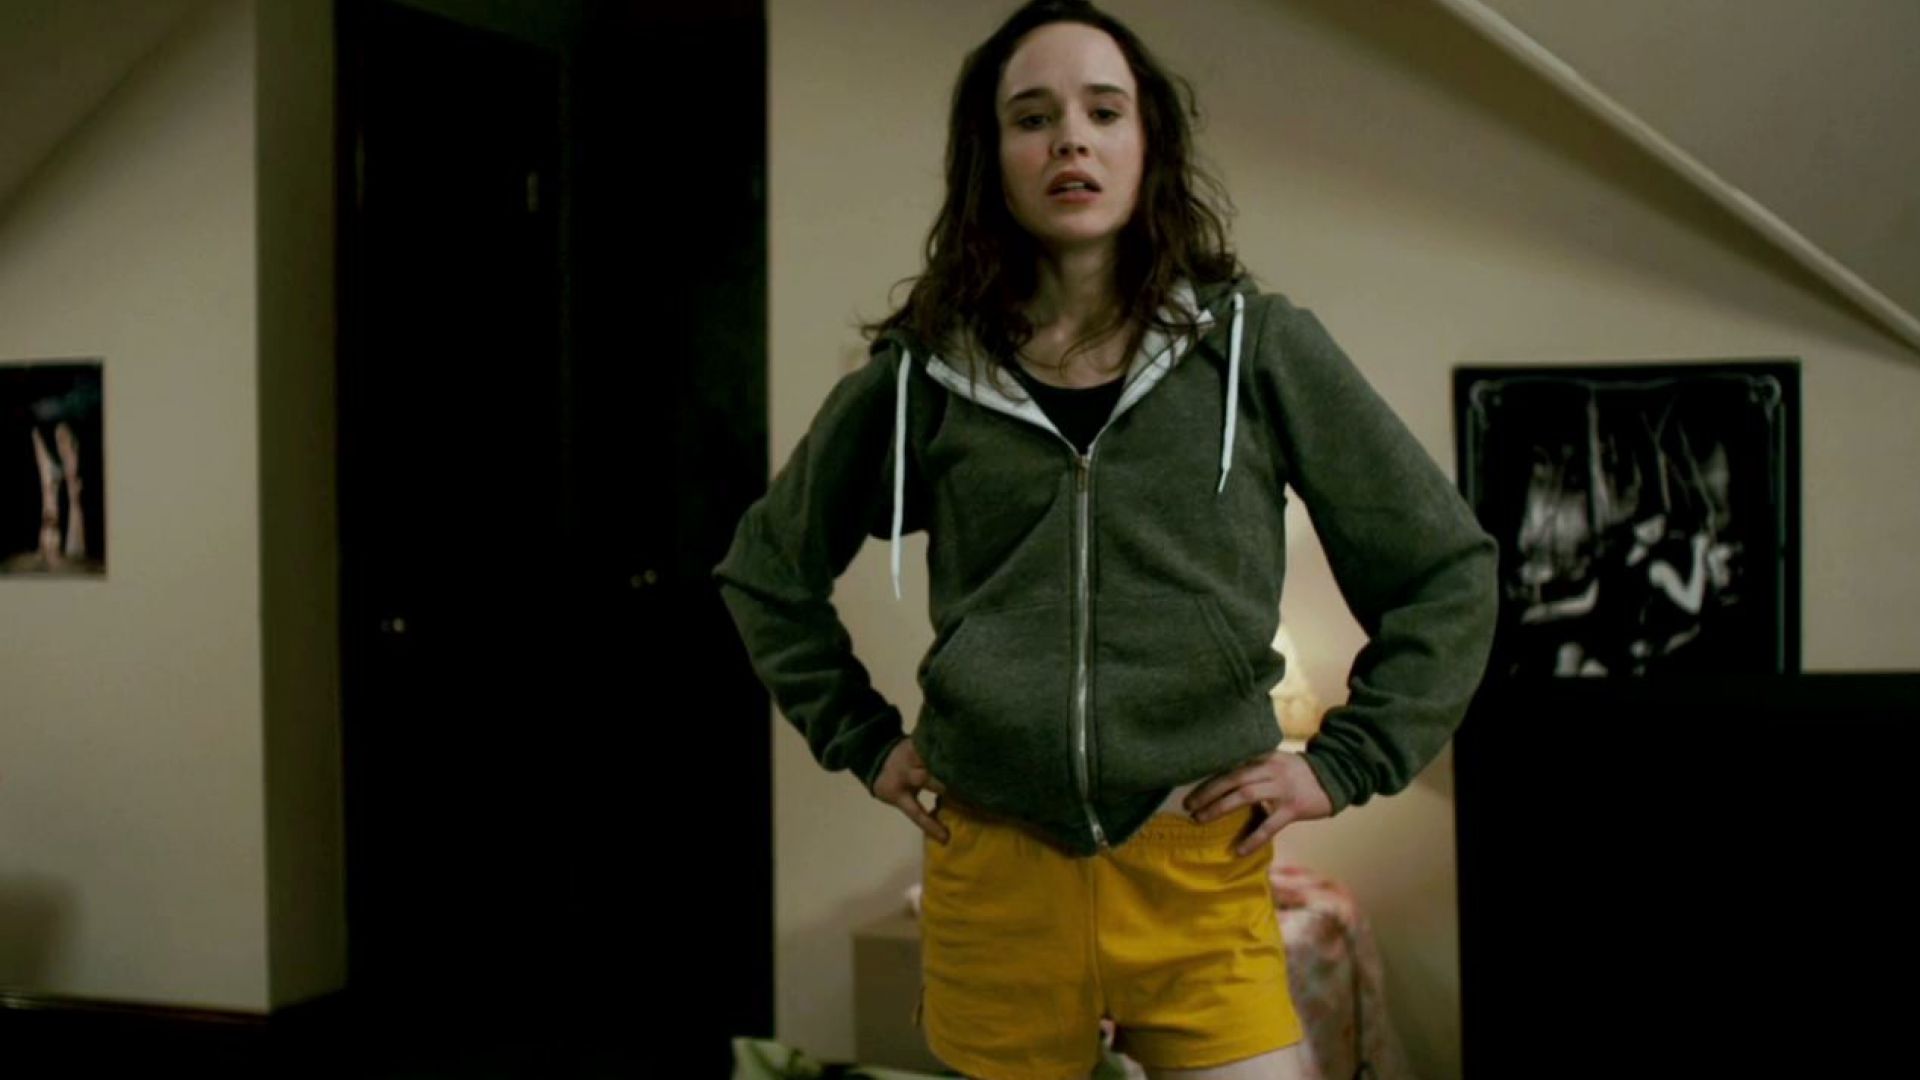 Ellen Page Shows her Moves in Super